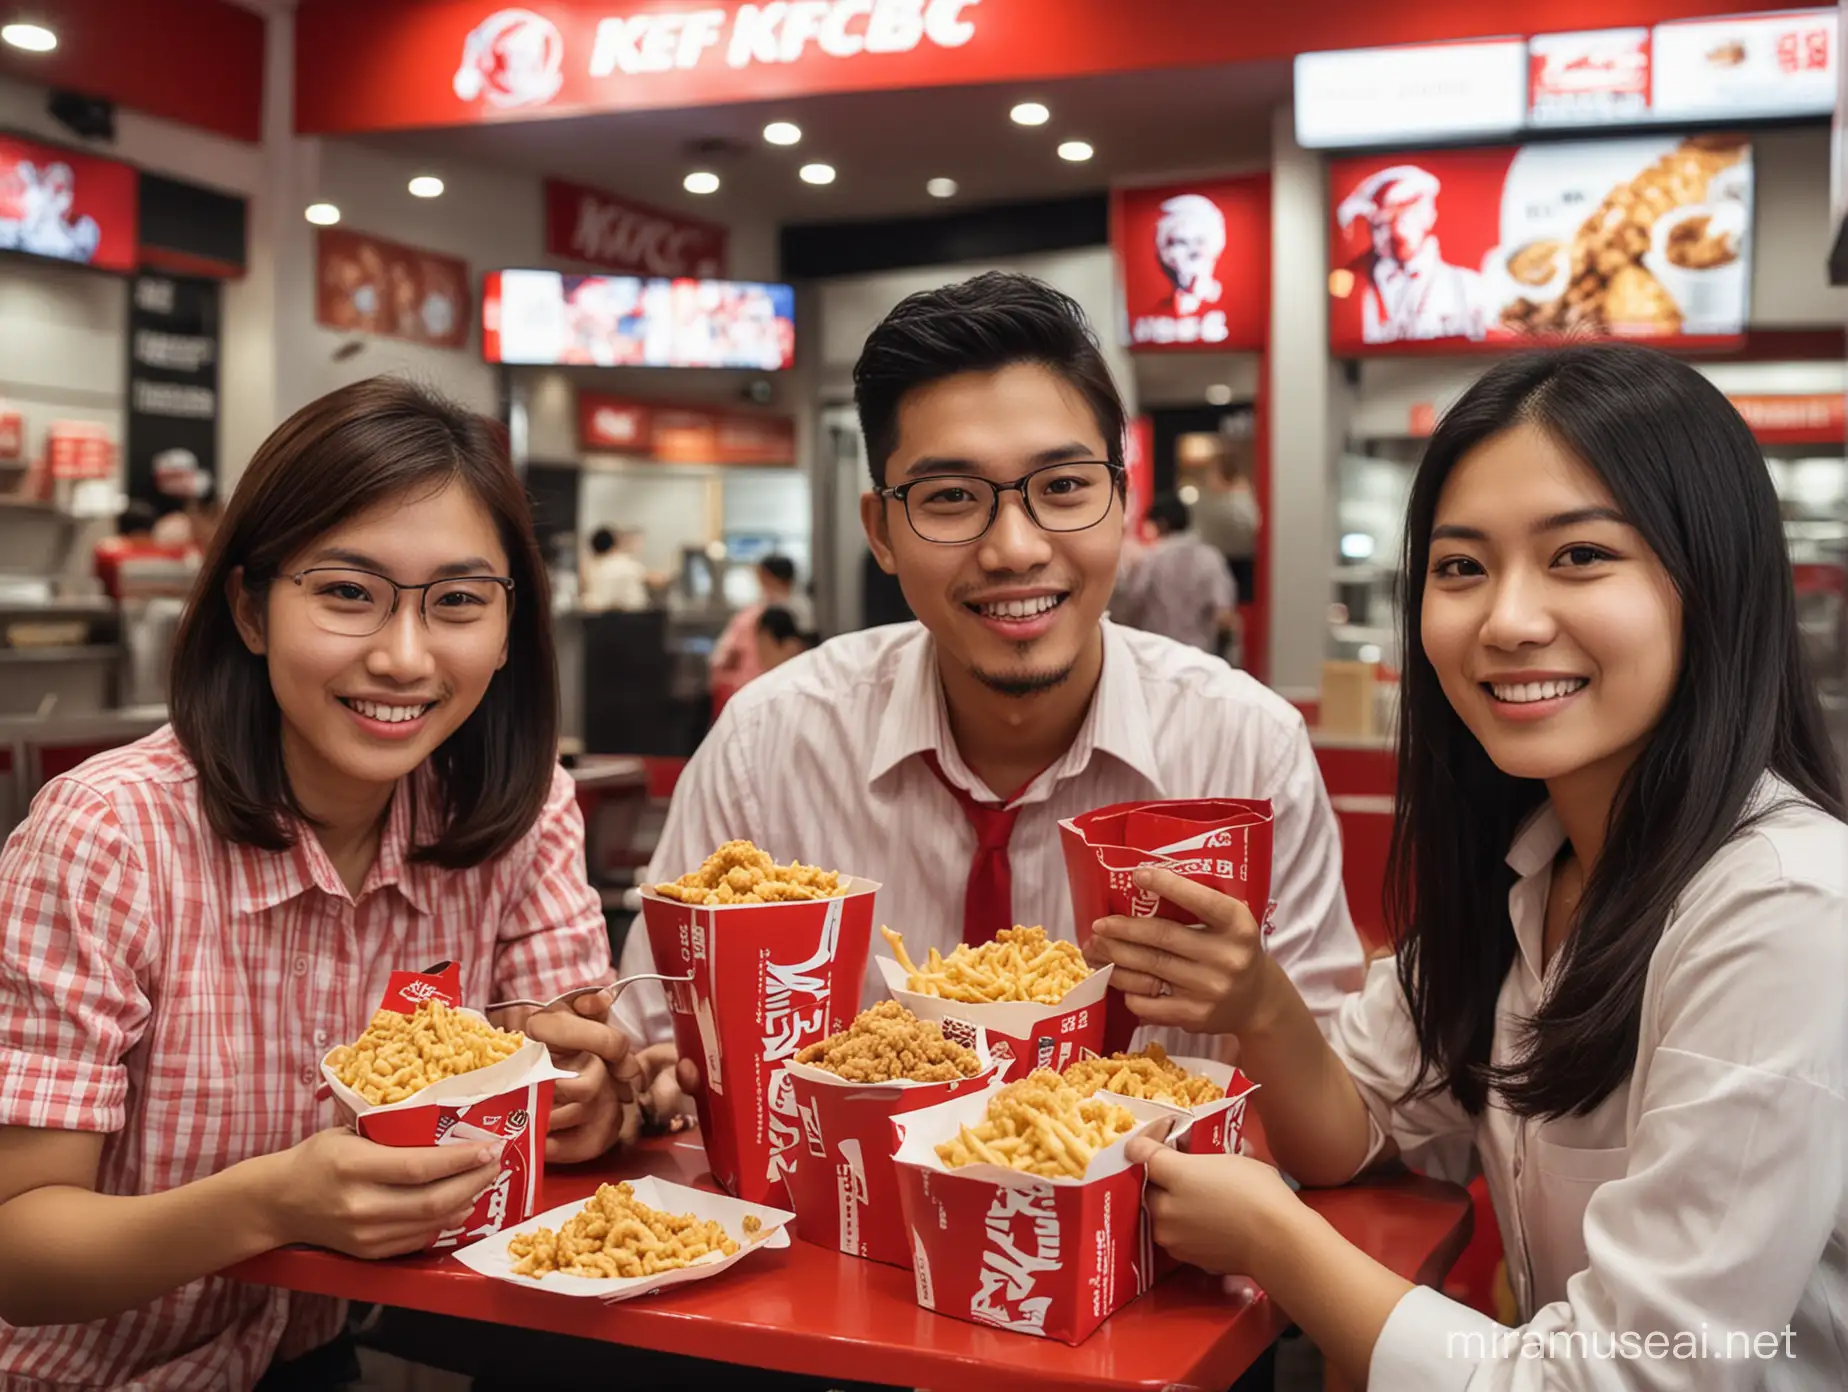 Malaysian Friends Enjoying Meal at KFC Restaurant